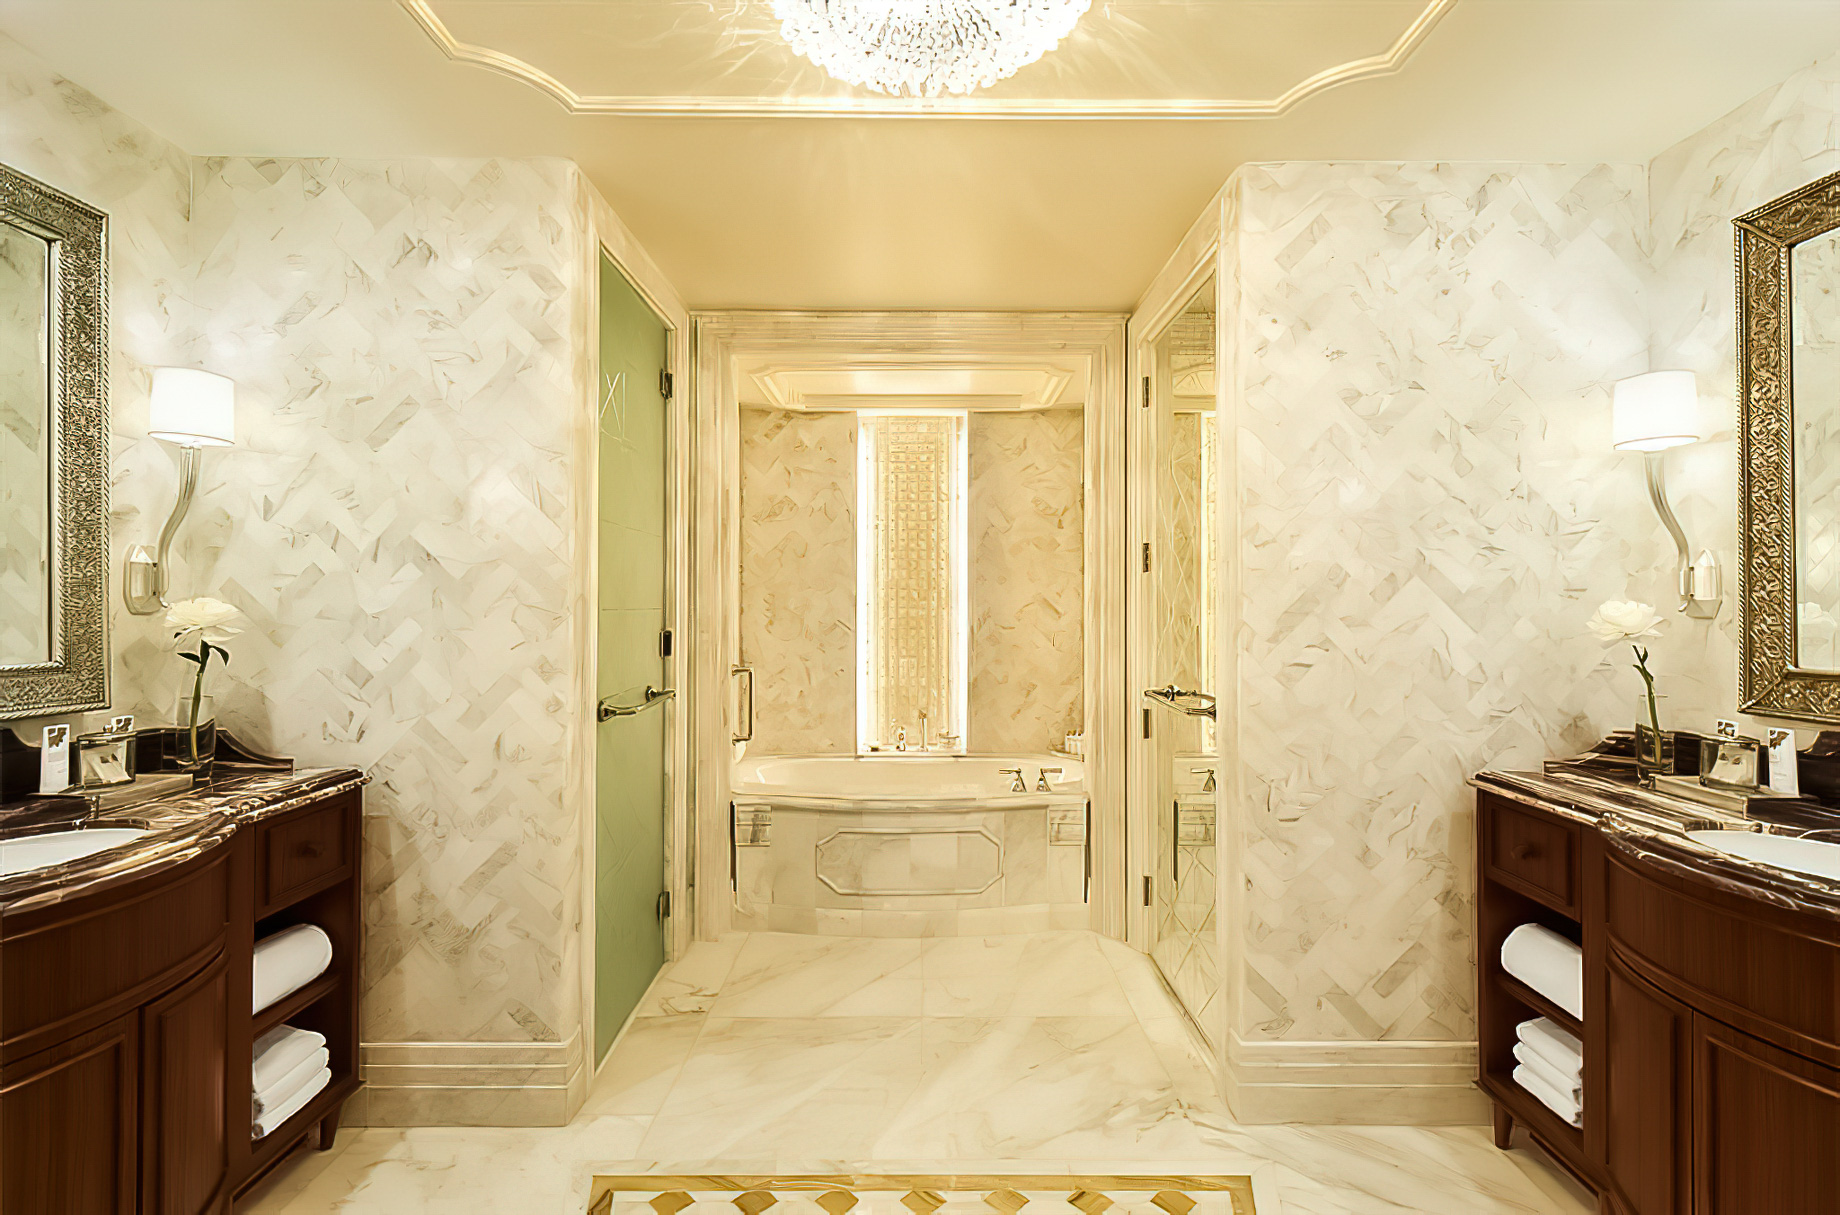 The St. Regis Abu Dhabi Hotel - Abu Dhabi, United Arab Emirates - St. Regis Suite Bathroom